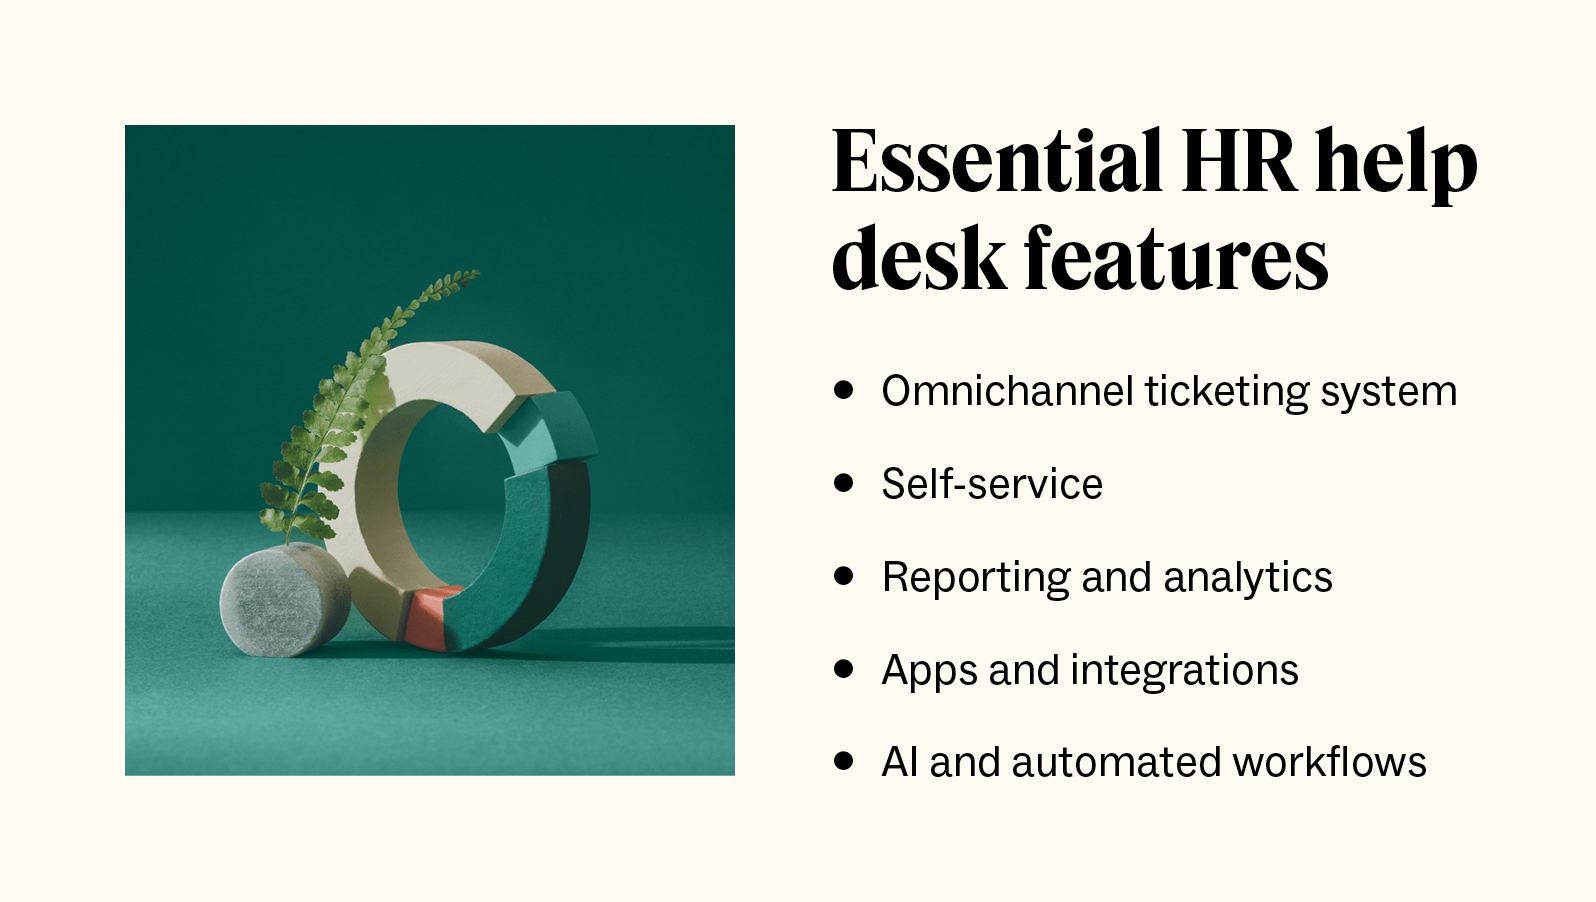 Essential HR help desk features